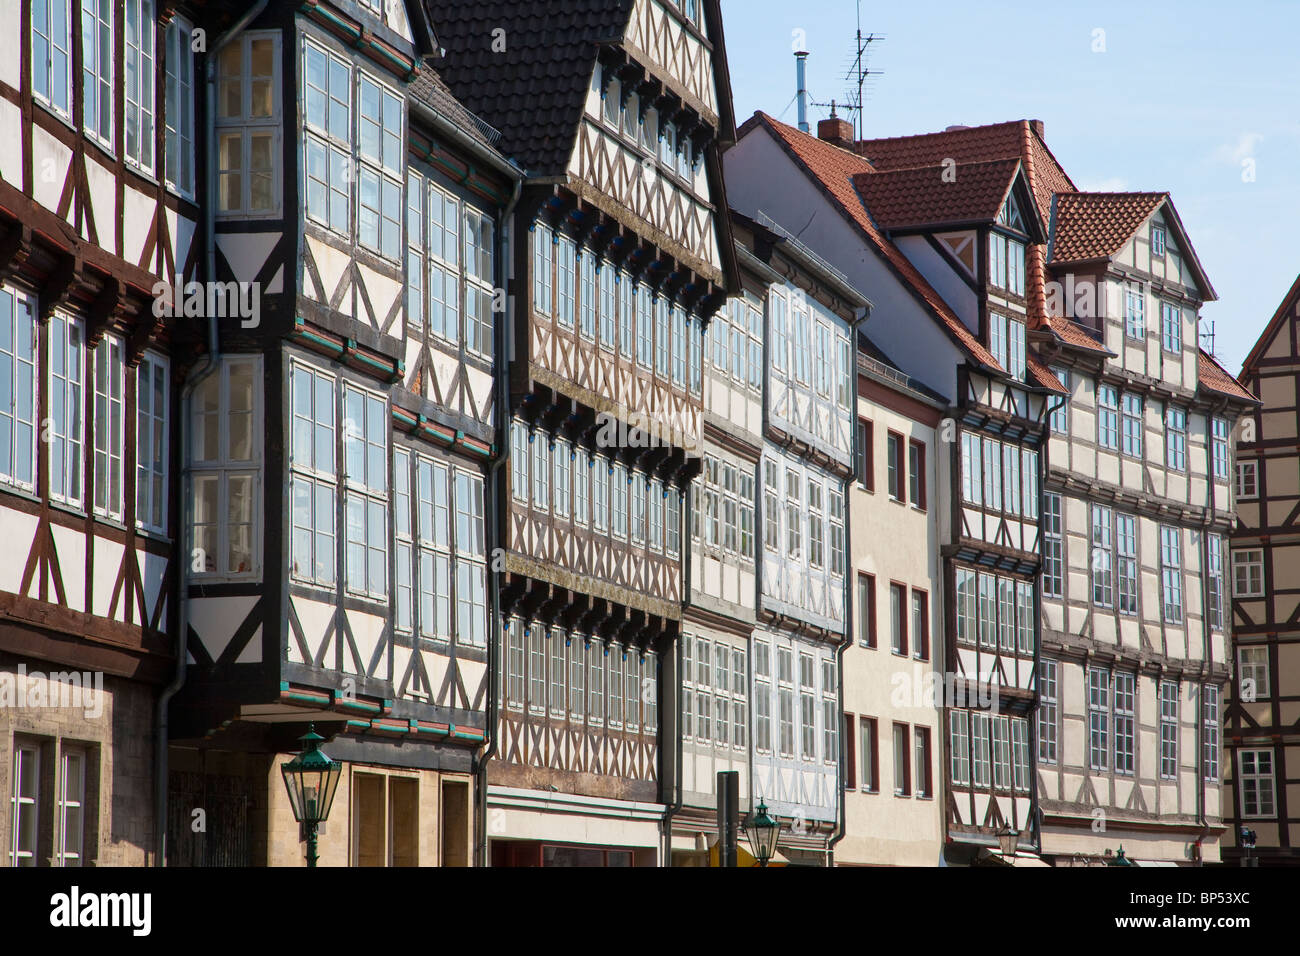 FRAME HOUSES AT BURGSTRASSE STREET, HOLZMARKT, HANOVER, LOWER SAXONY, GERMANY Stock Photo